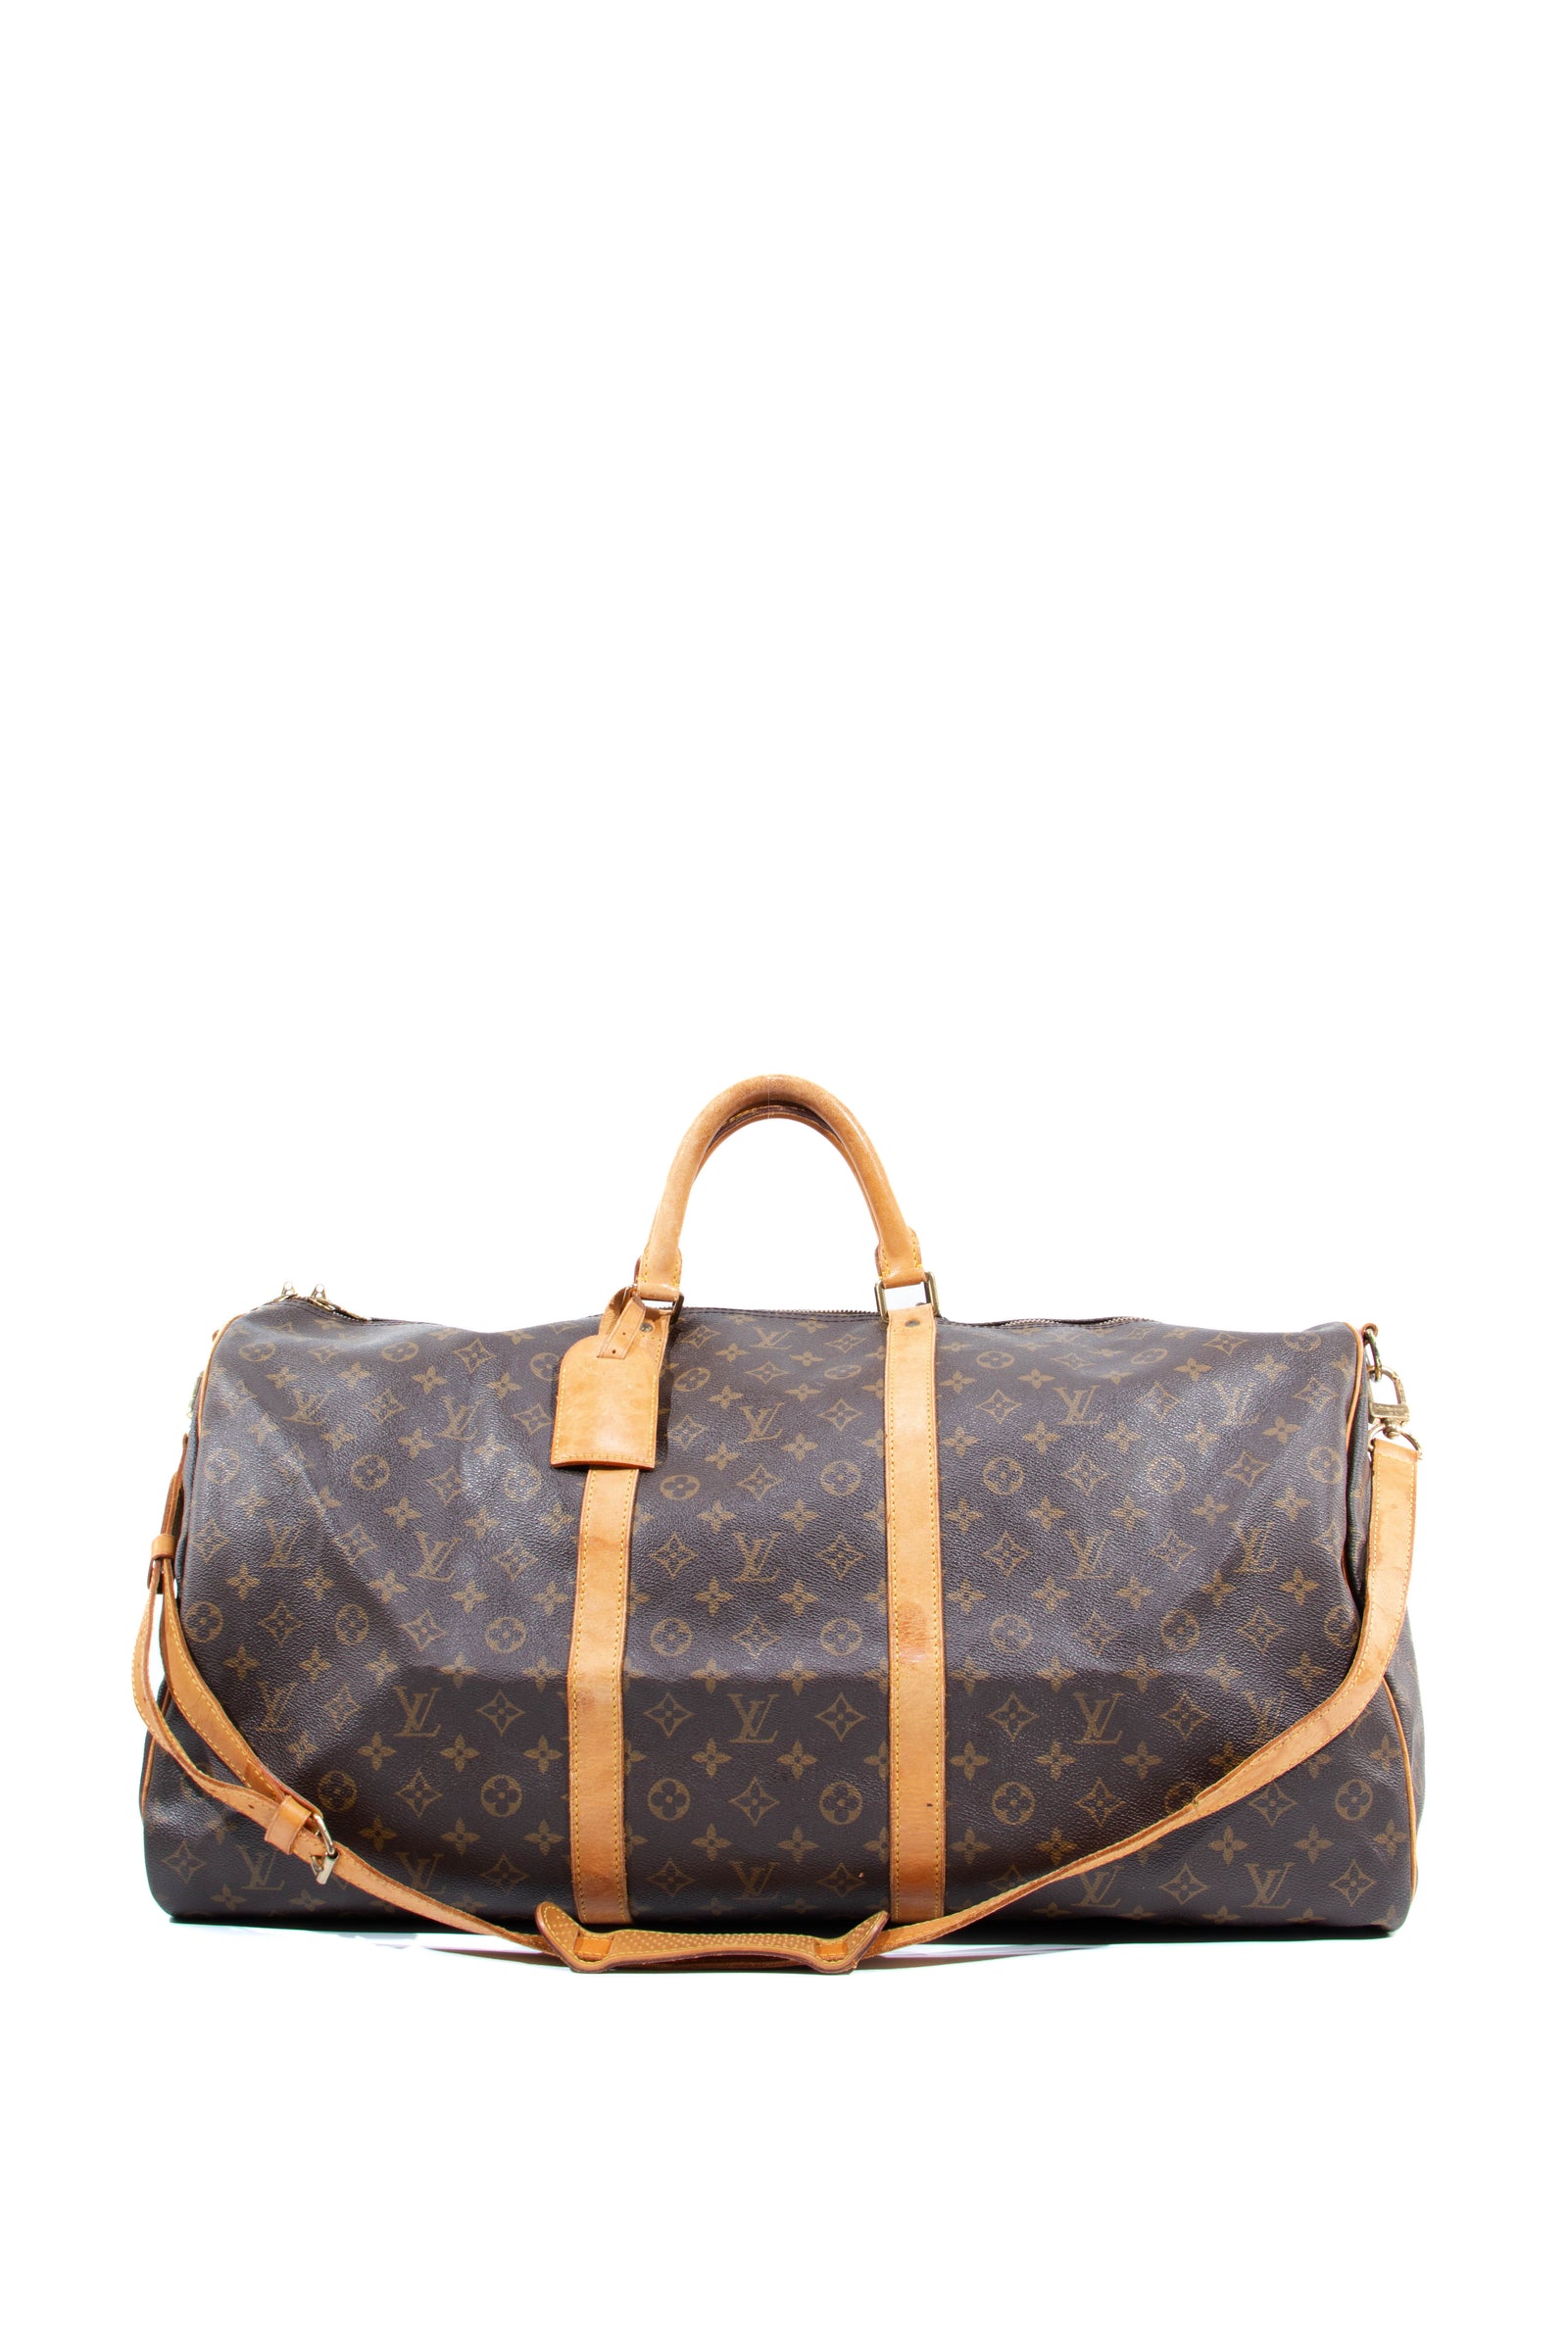 FWRD Renew Louis Vuitton Keepall Bandouliere 50 Boston Bag in Yellow